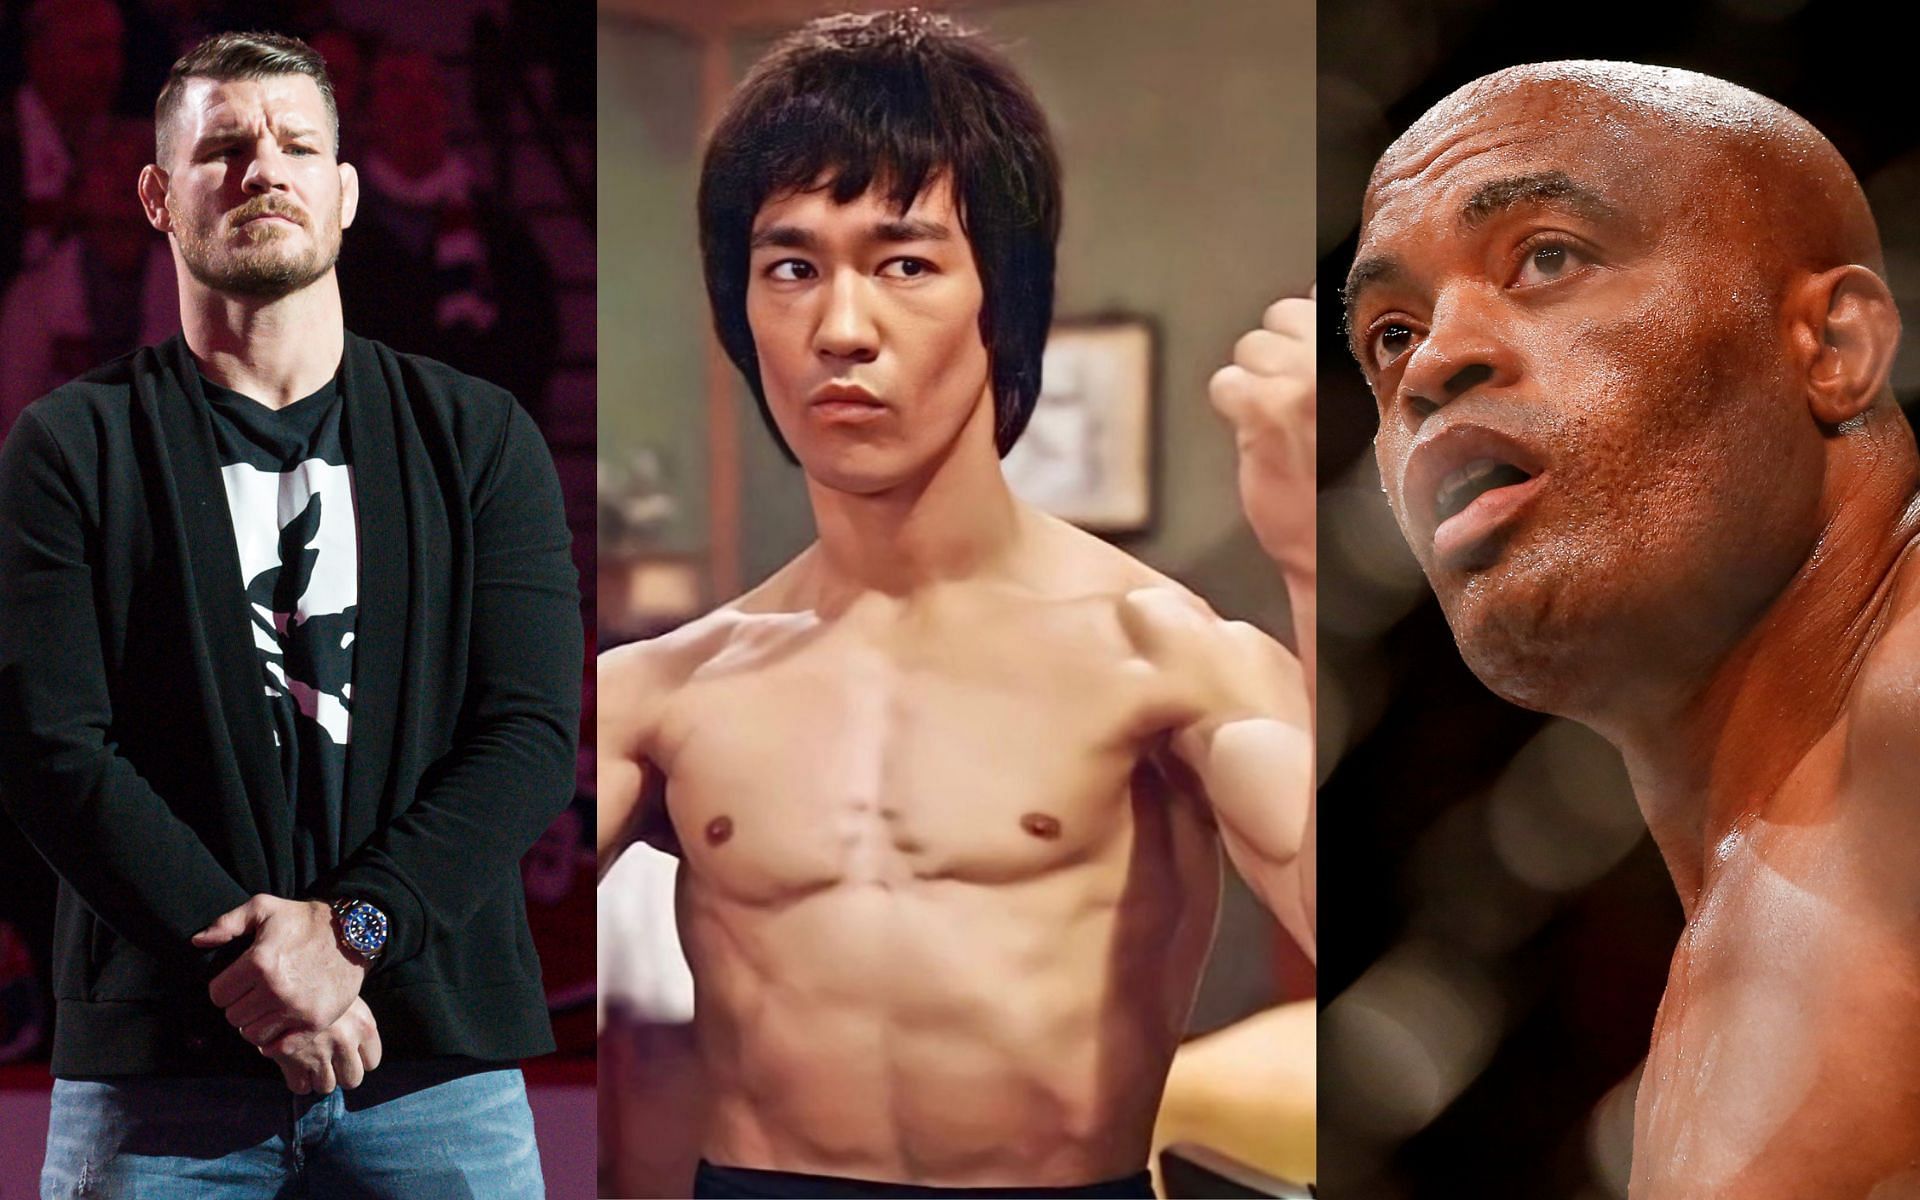 Michael Bisping (left), Bruce Lee (centre), Anderson Silva (right) [Image courtesy of @brucelee on Instagram]